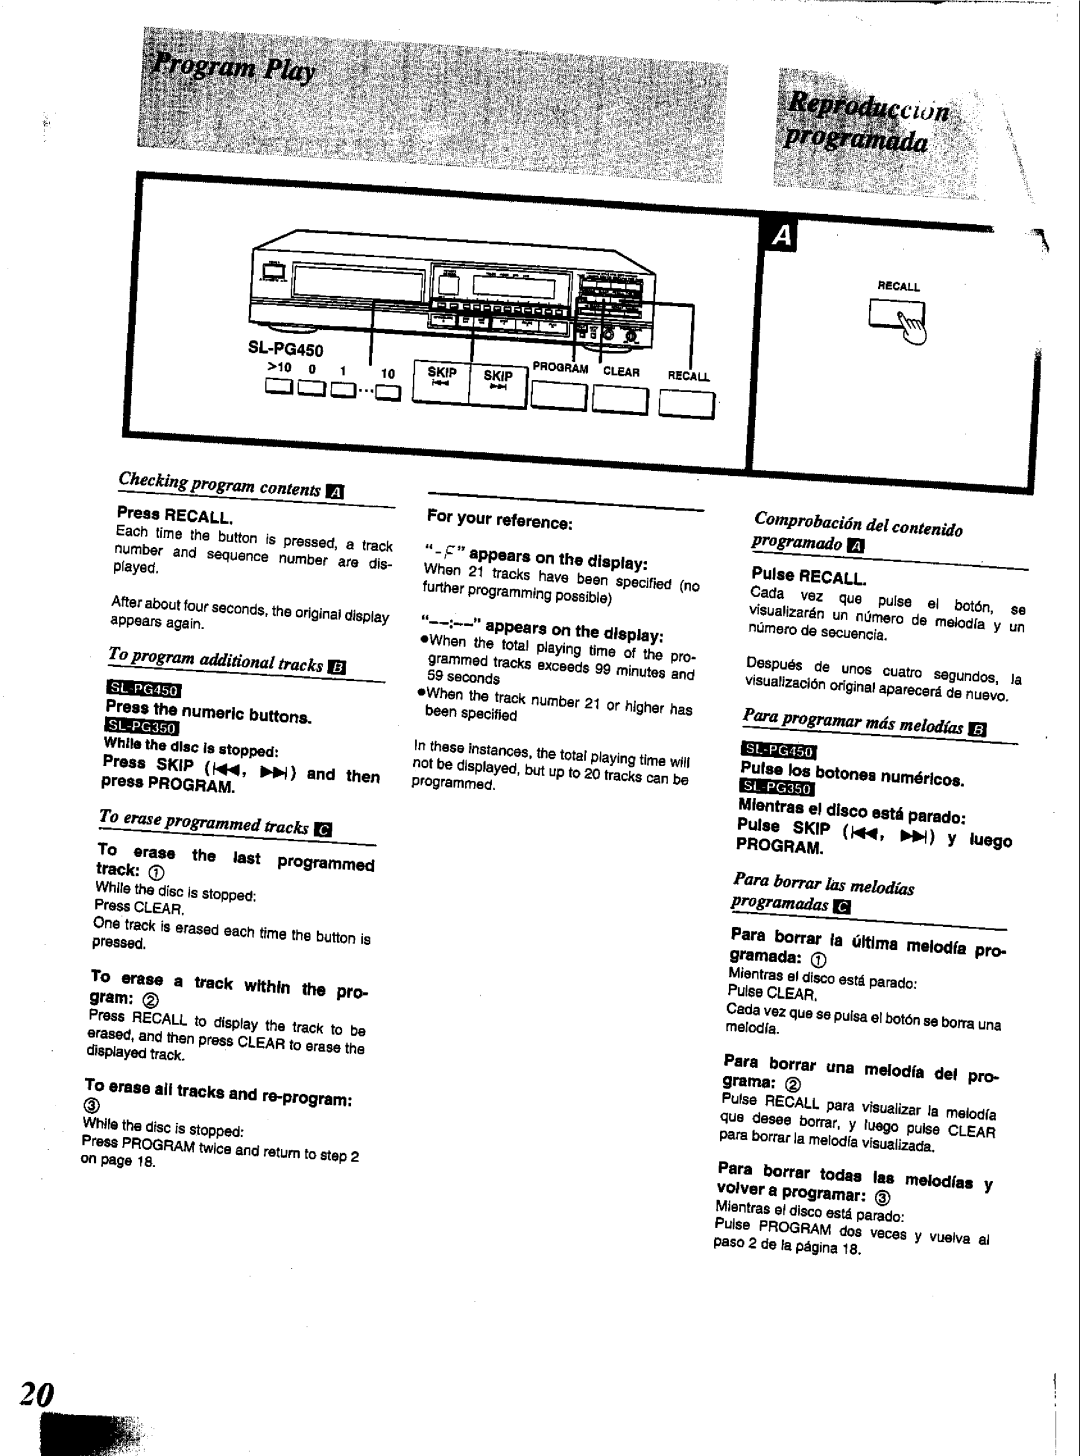 Technics SL-PG450, SL-PG350 manual 